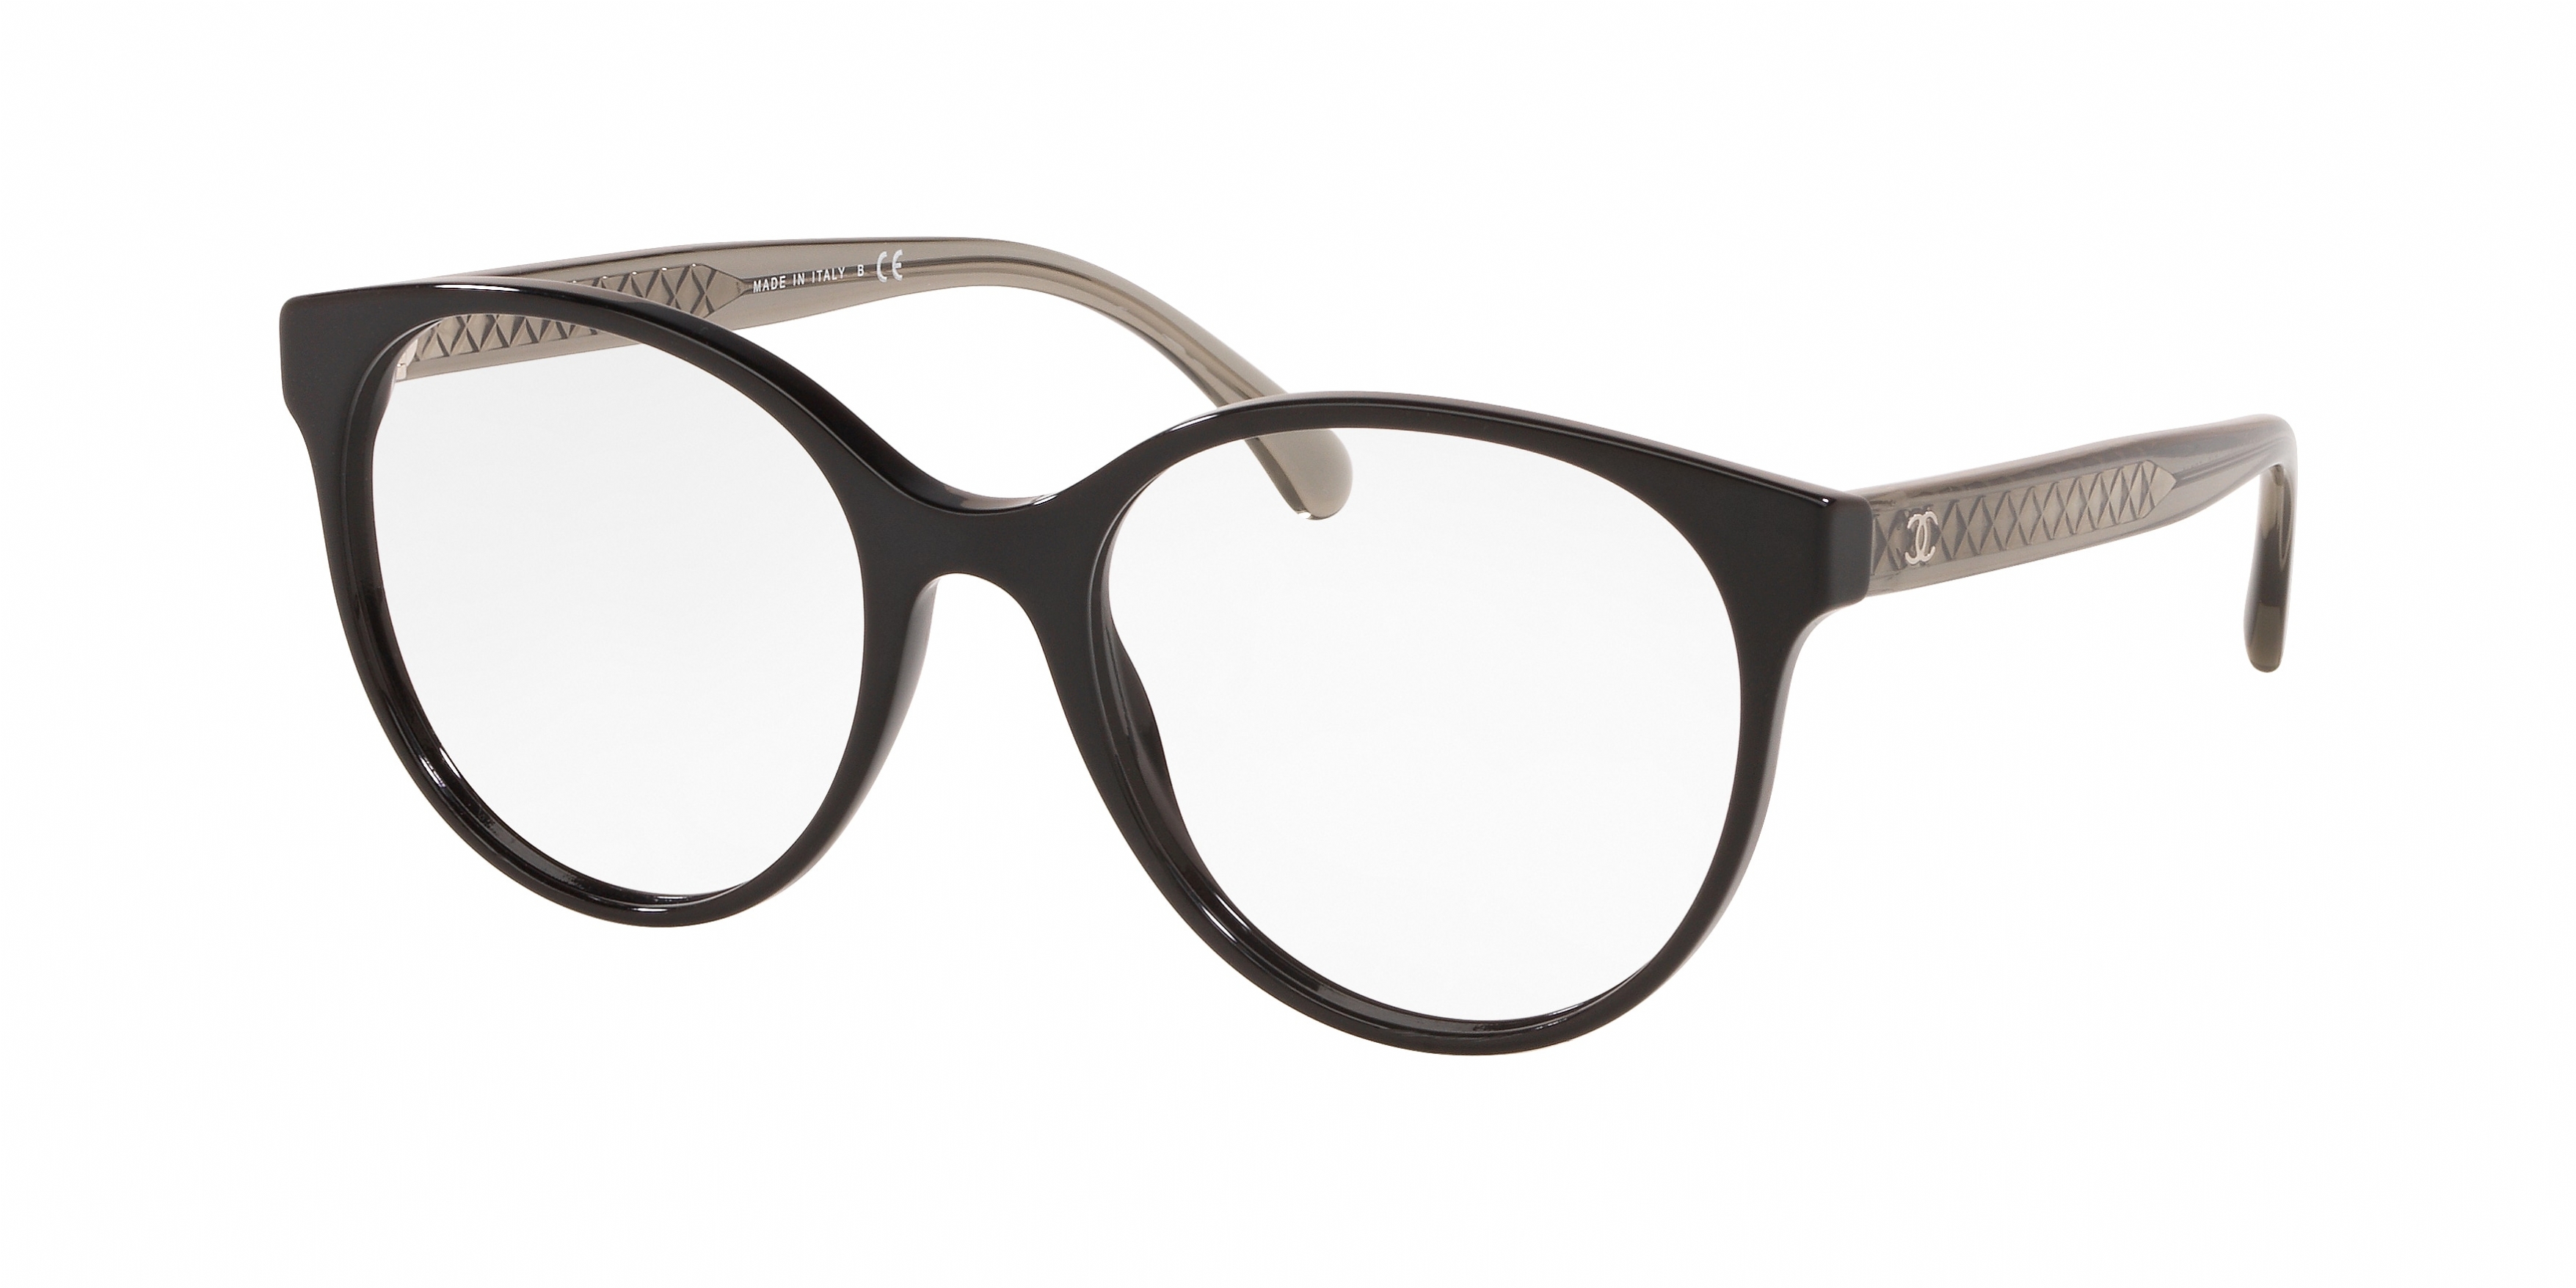 Chanel 3401 Eyeglasses